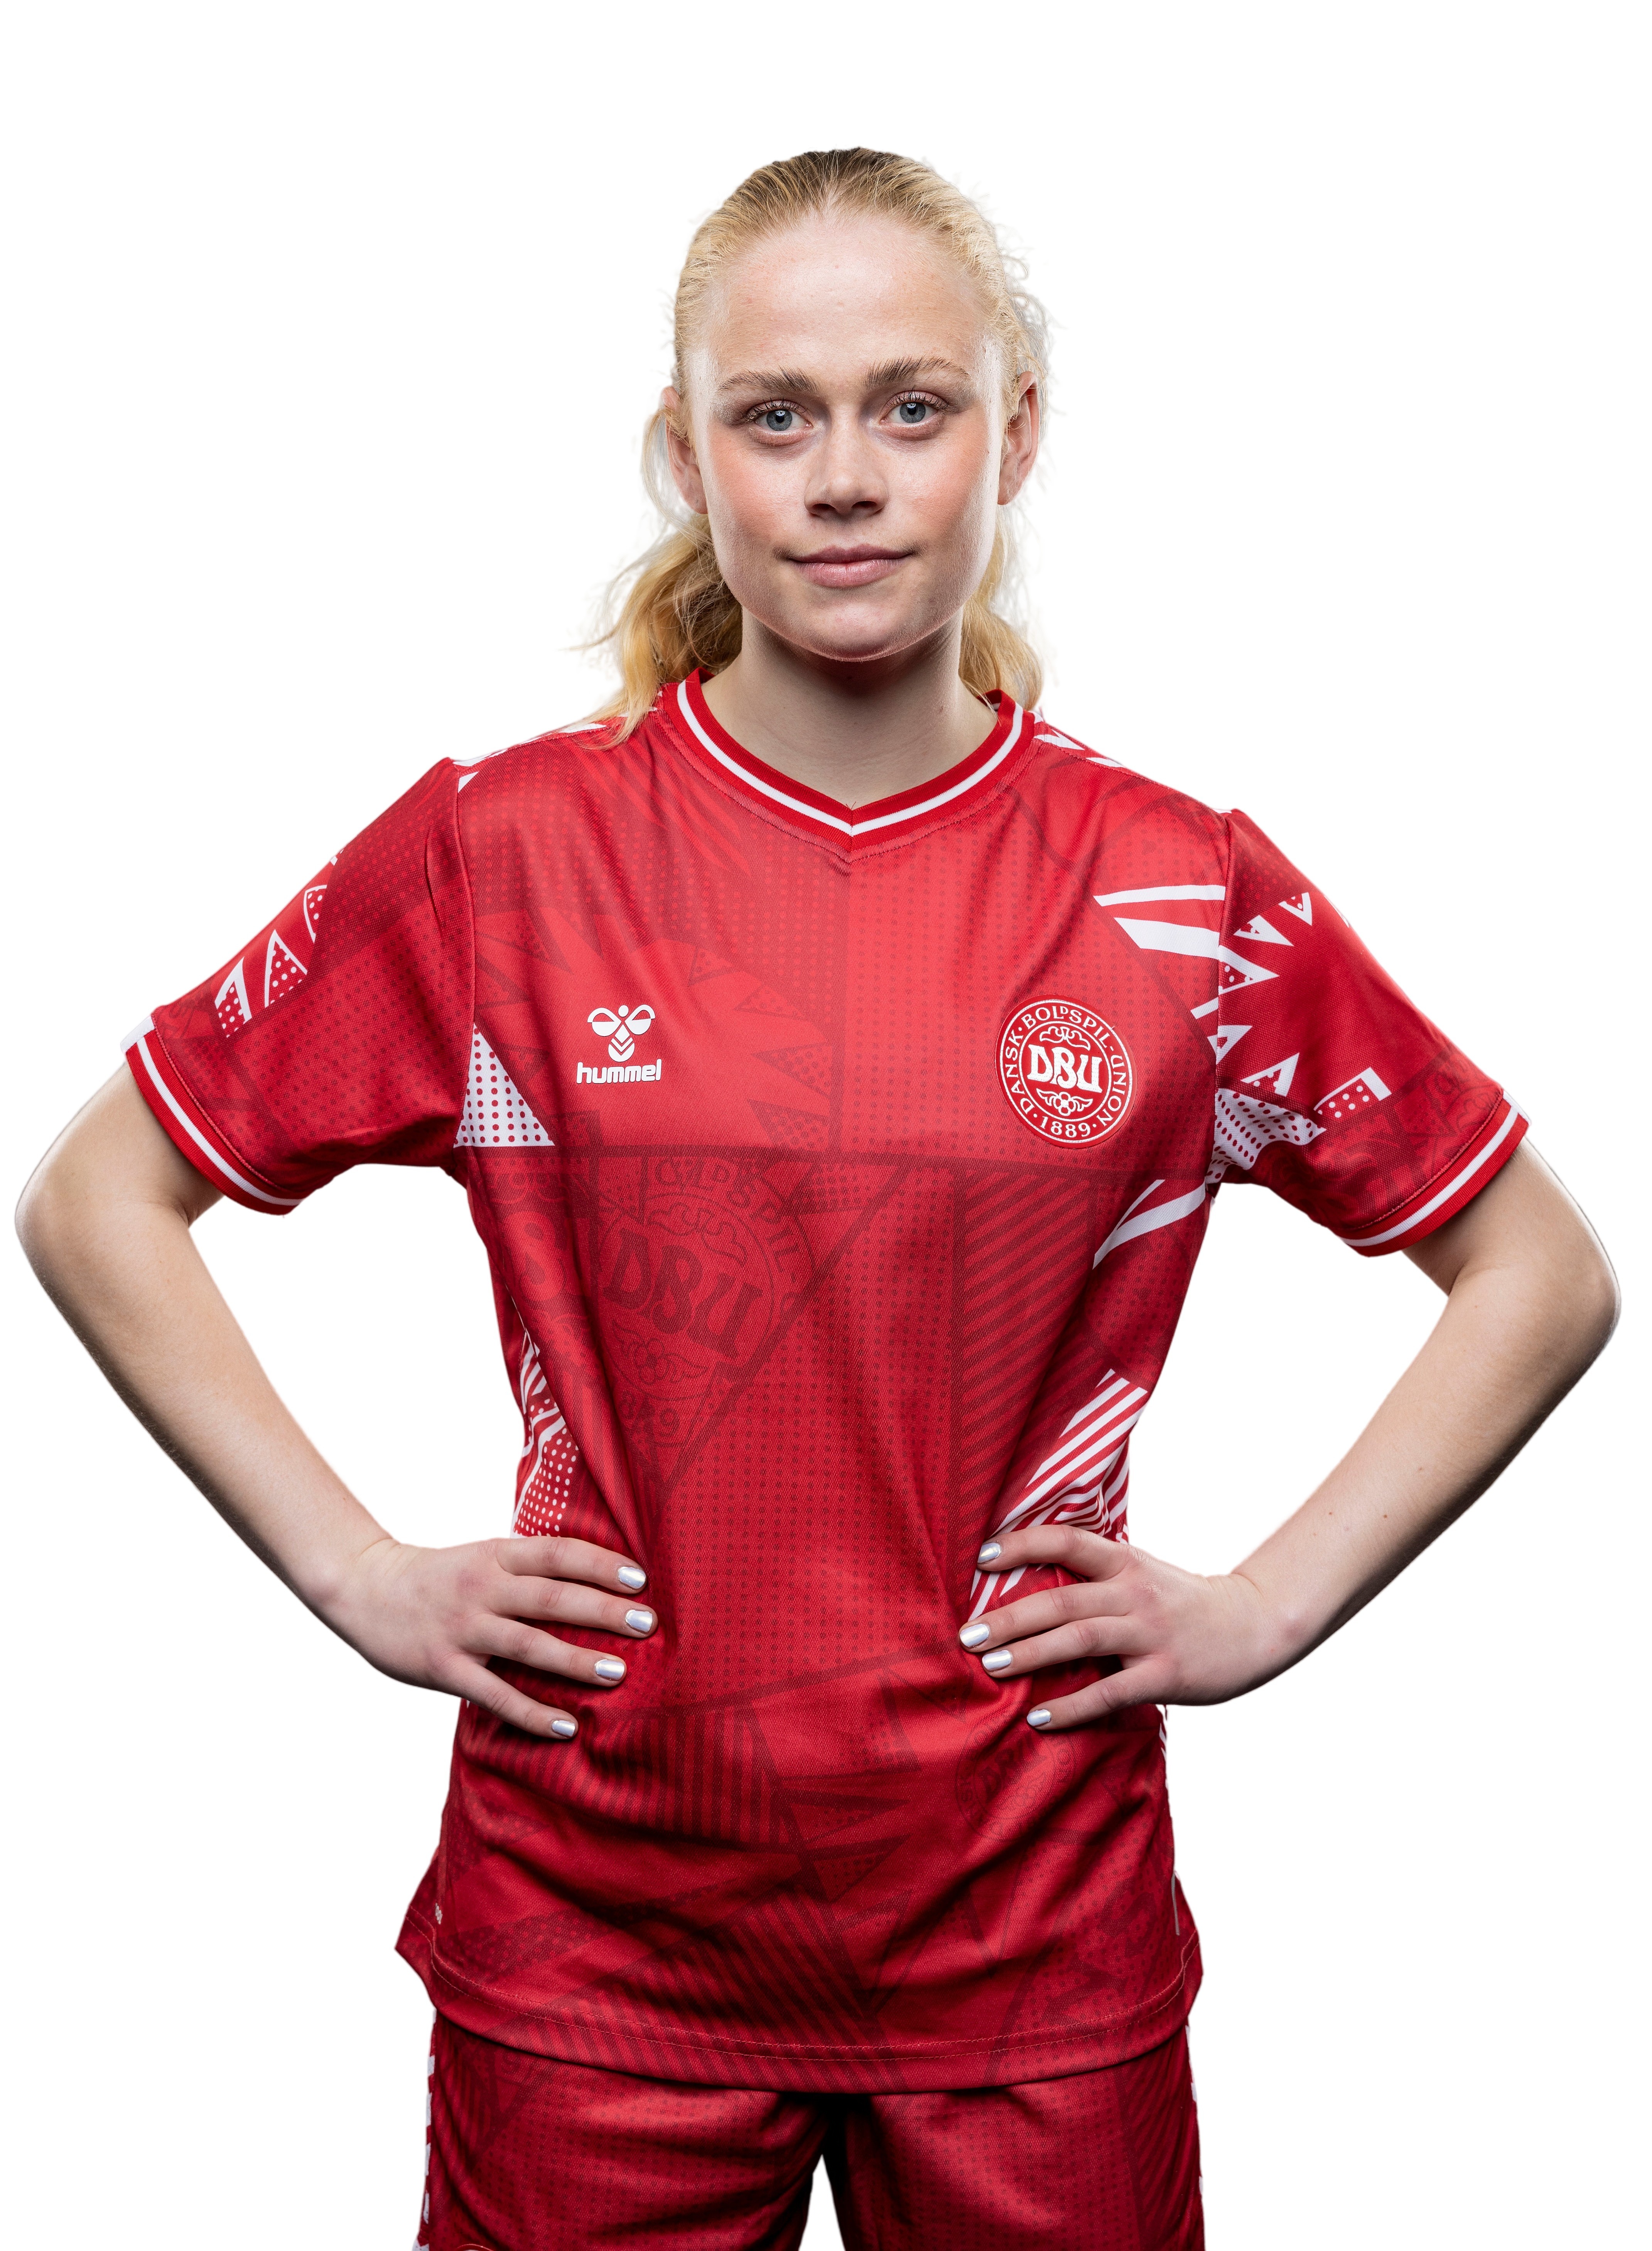 Kathrine Møller Kühl